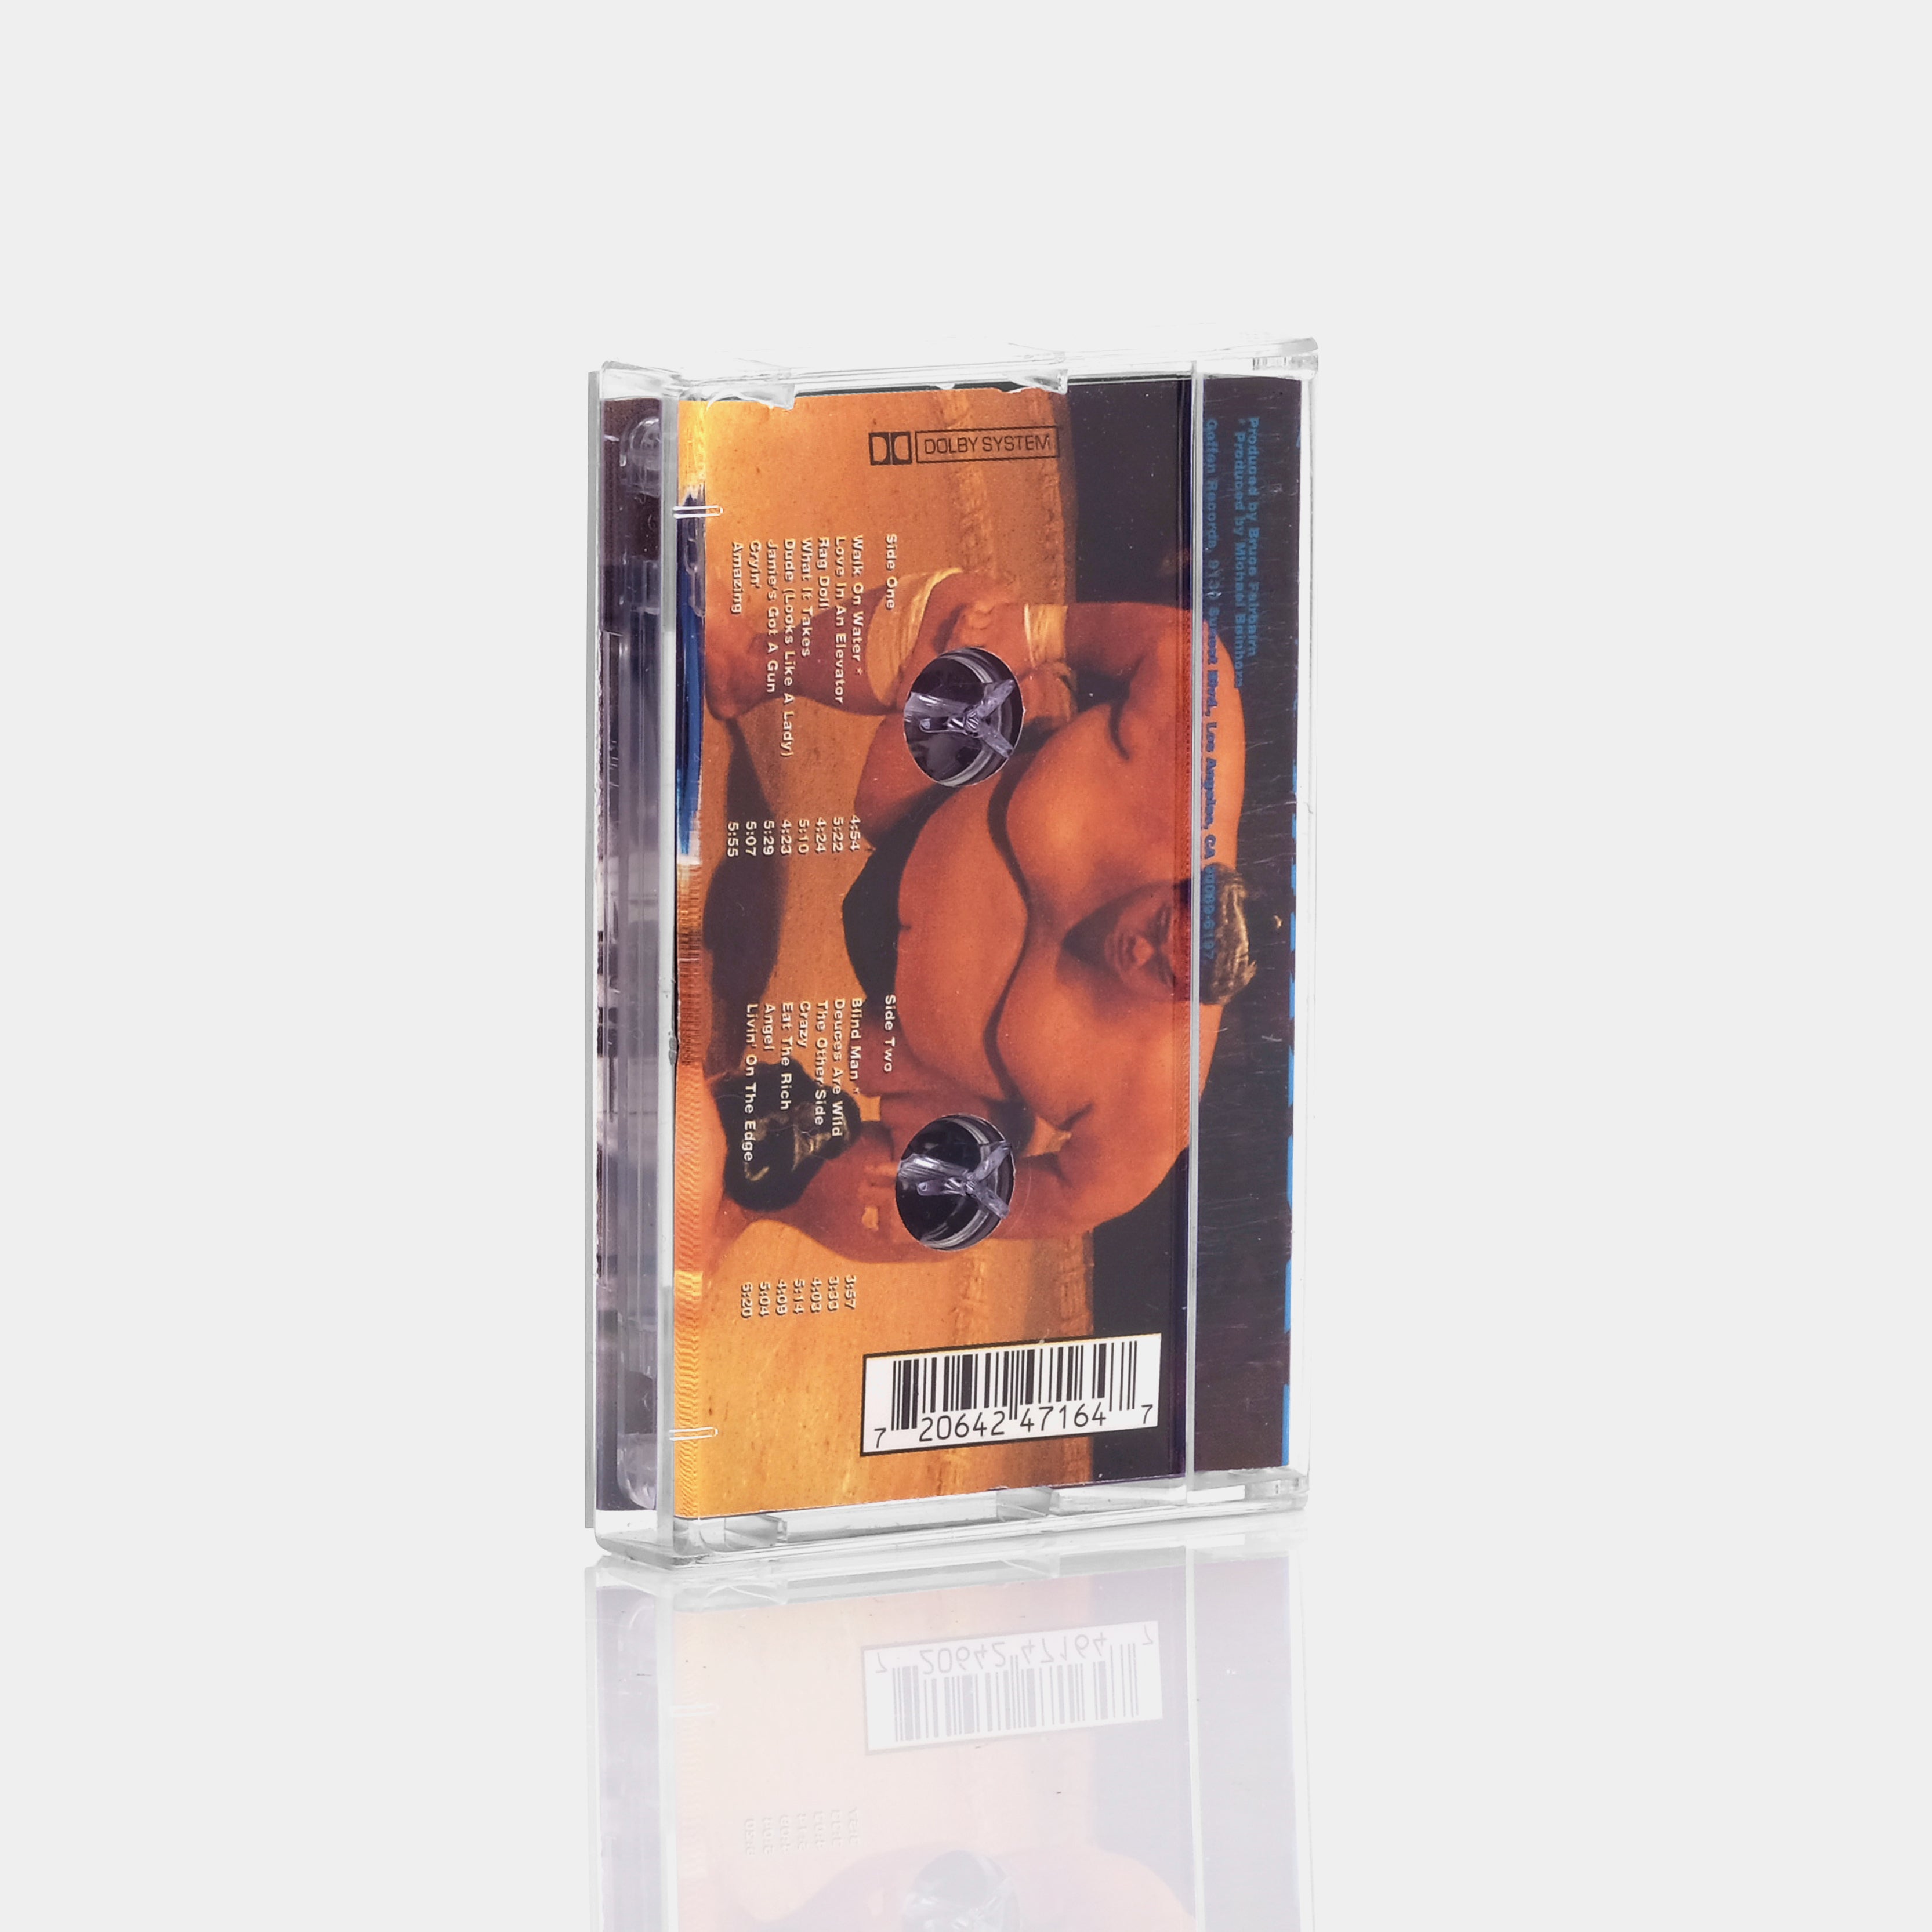 Aerosmith - Big Ones Cassette Tape